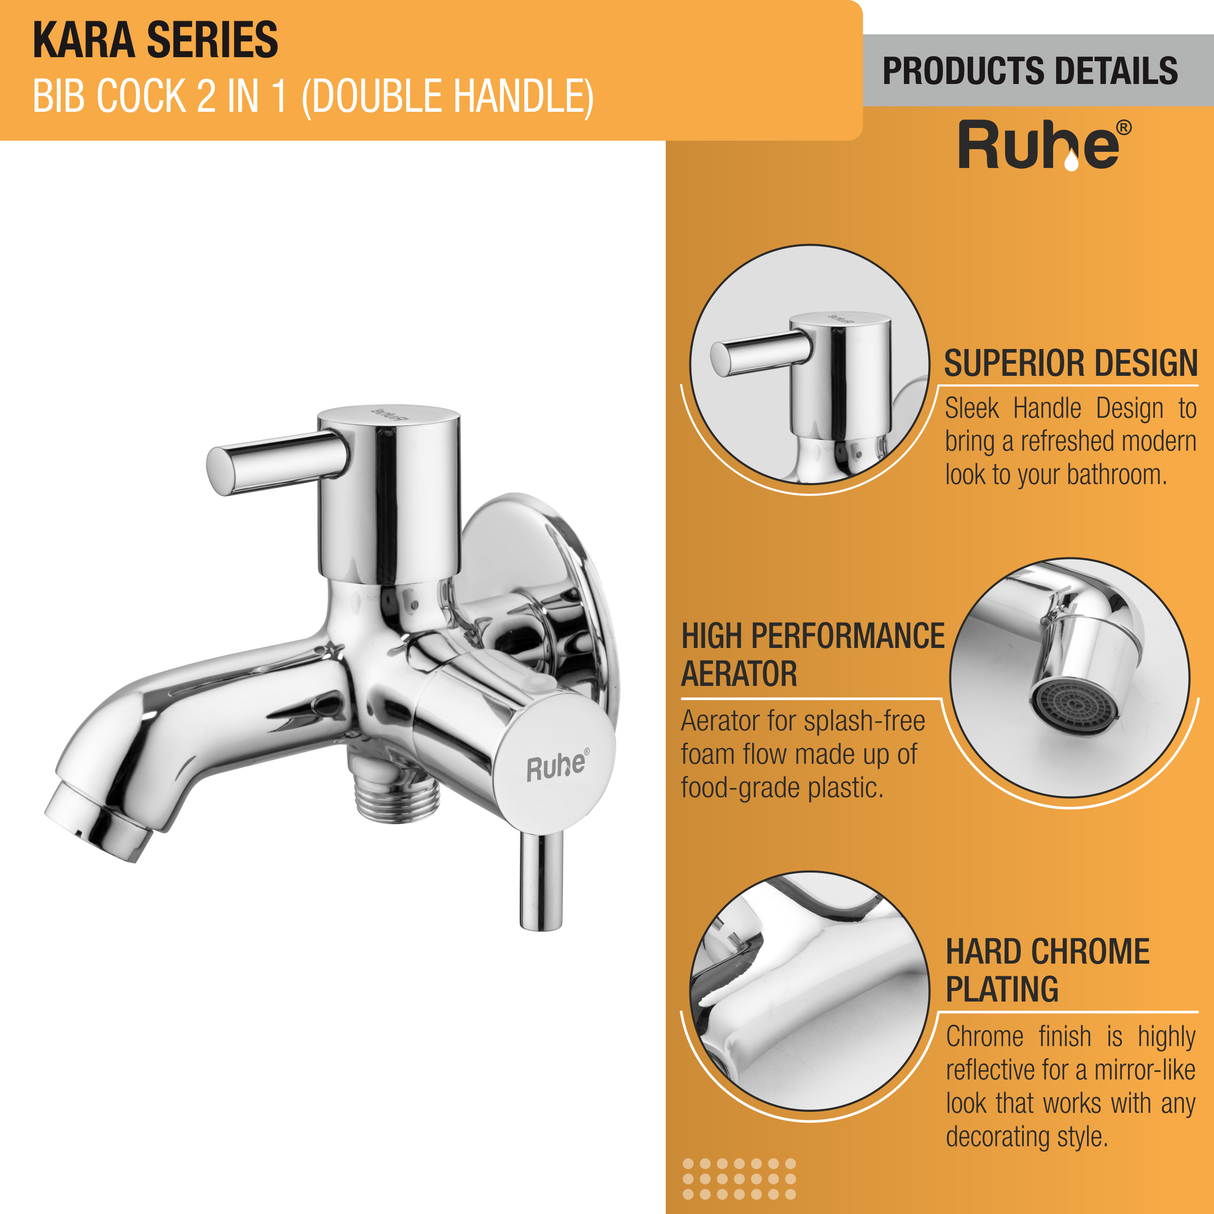 Kara Two Way Bib Tap Brass Faucet (Double Handle) product details